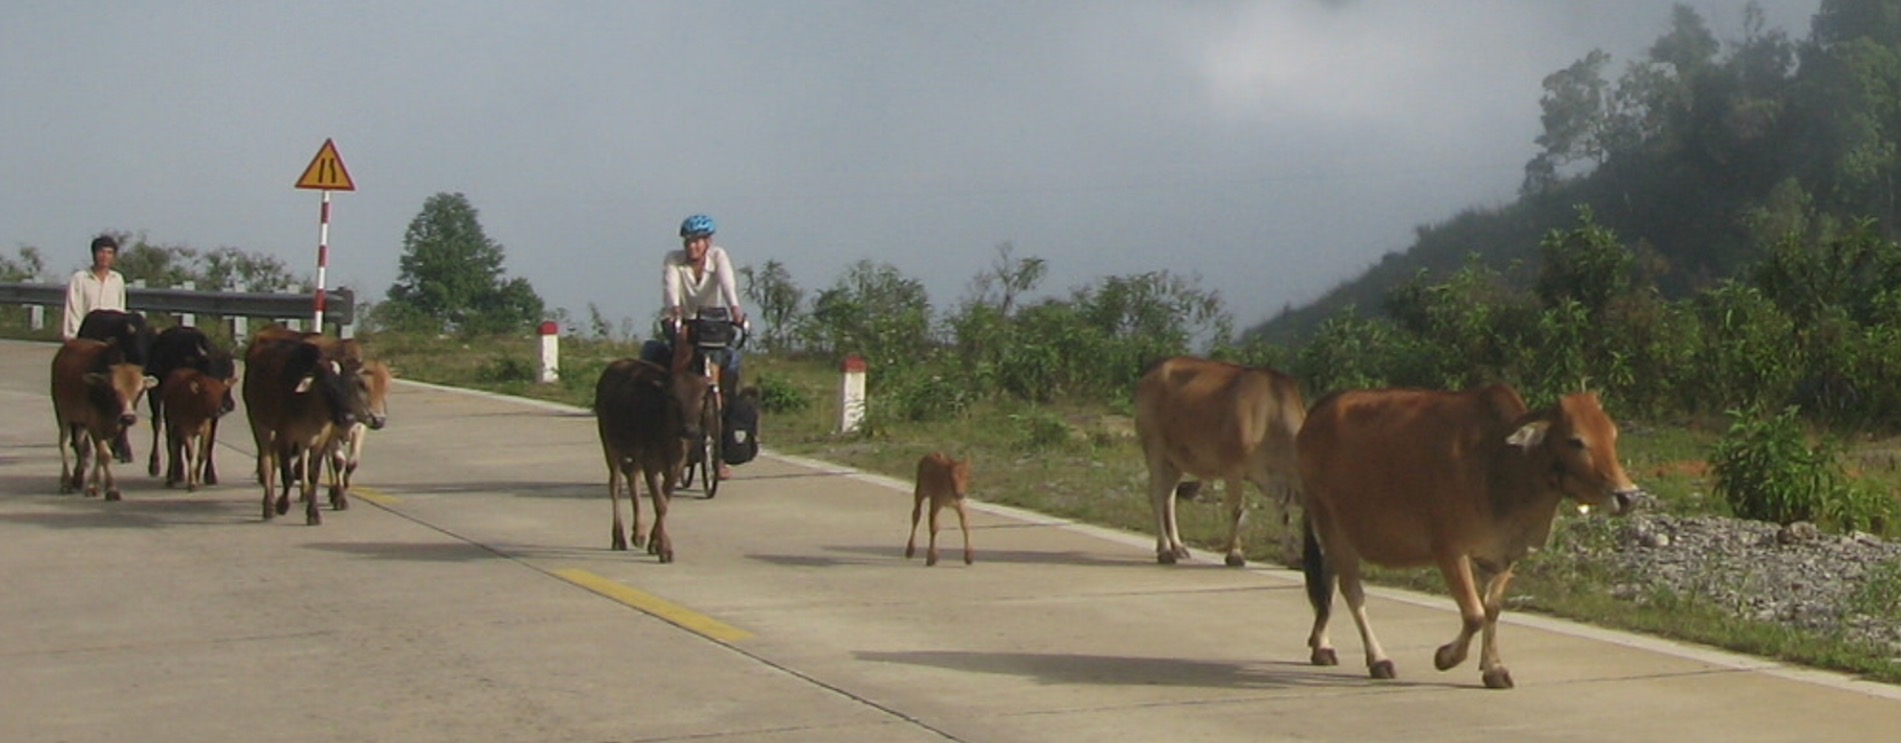 Dodging cows on the road in Vietnam.jpg